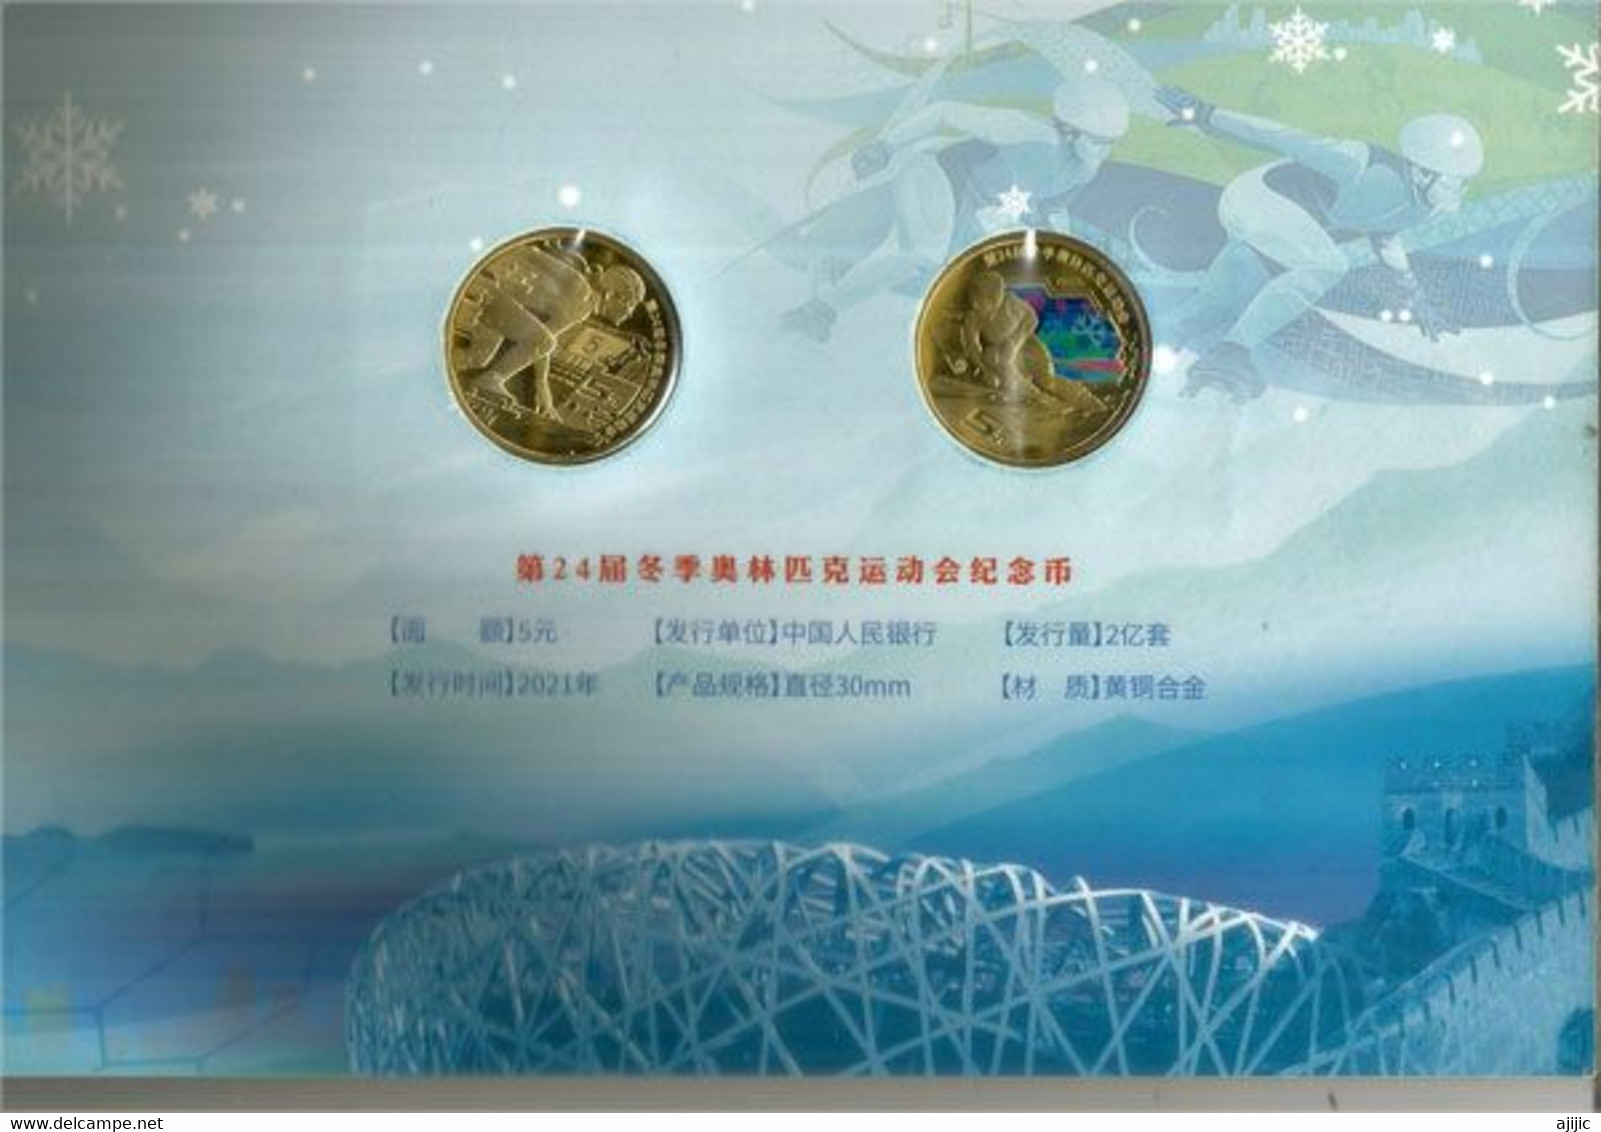 COMMEMORATIVE COINS FOR THE 24TH WINTER OLYMPICS GAMES BEIJING (Dans Coffret) Seulement Dispo.pour VIP - Winter 2022: Beijing